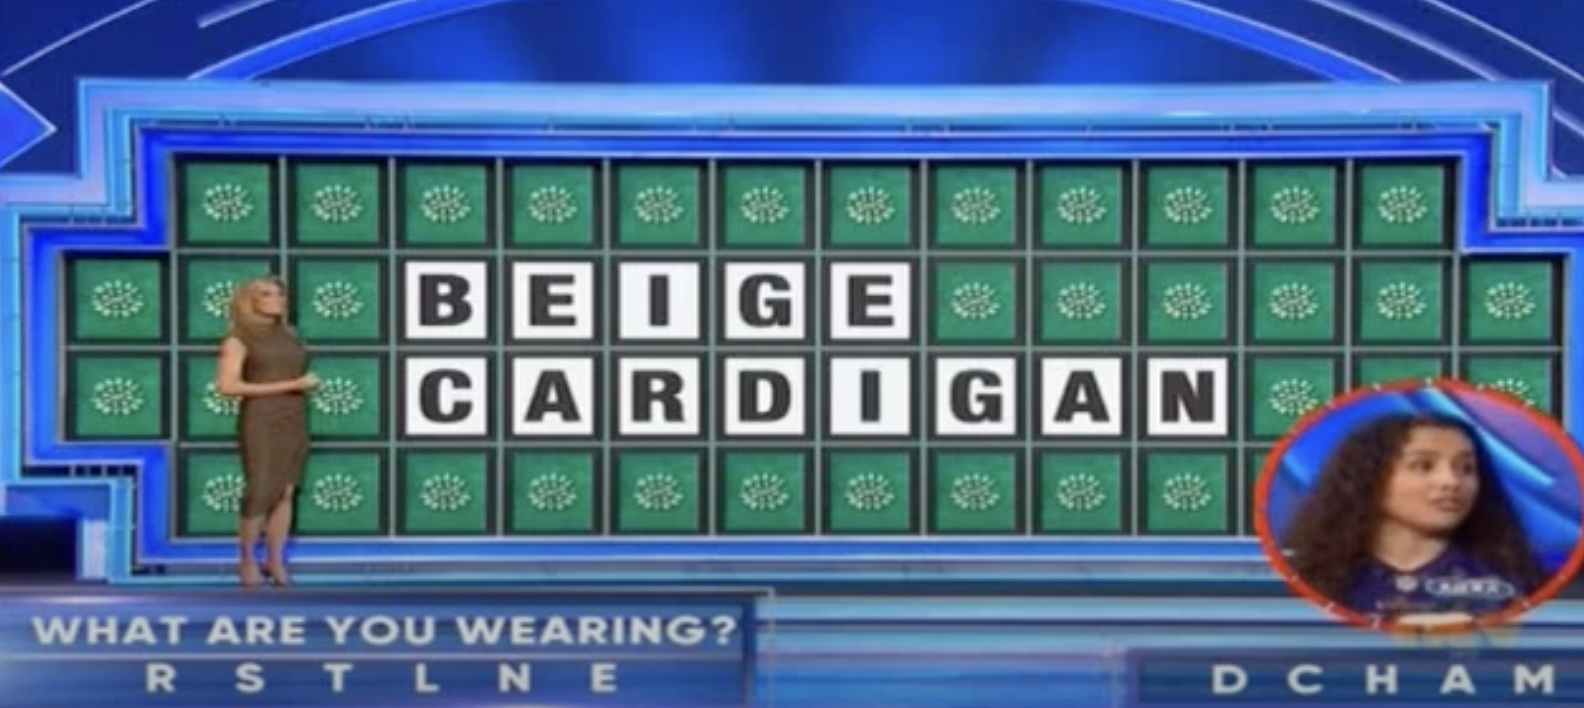 Kiera did not solve the bonus puzzle as Beige Cardigan